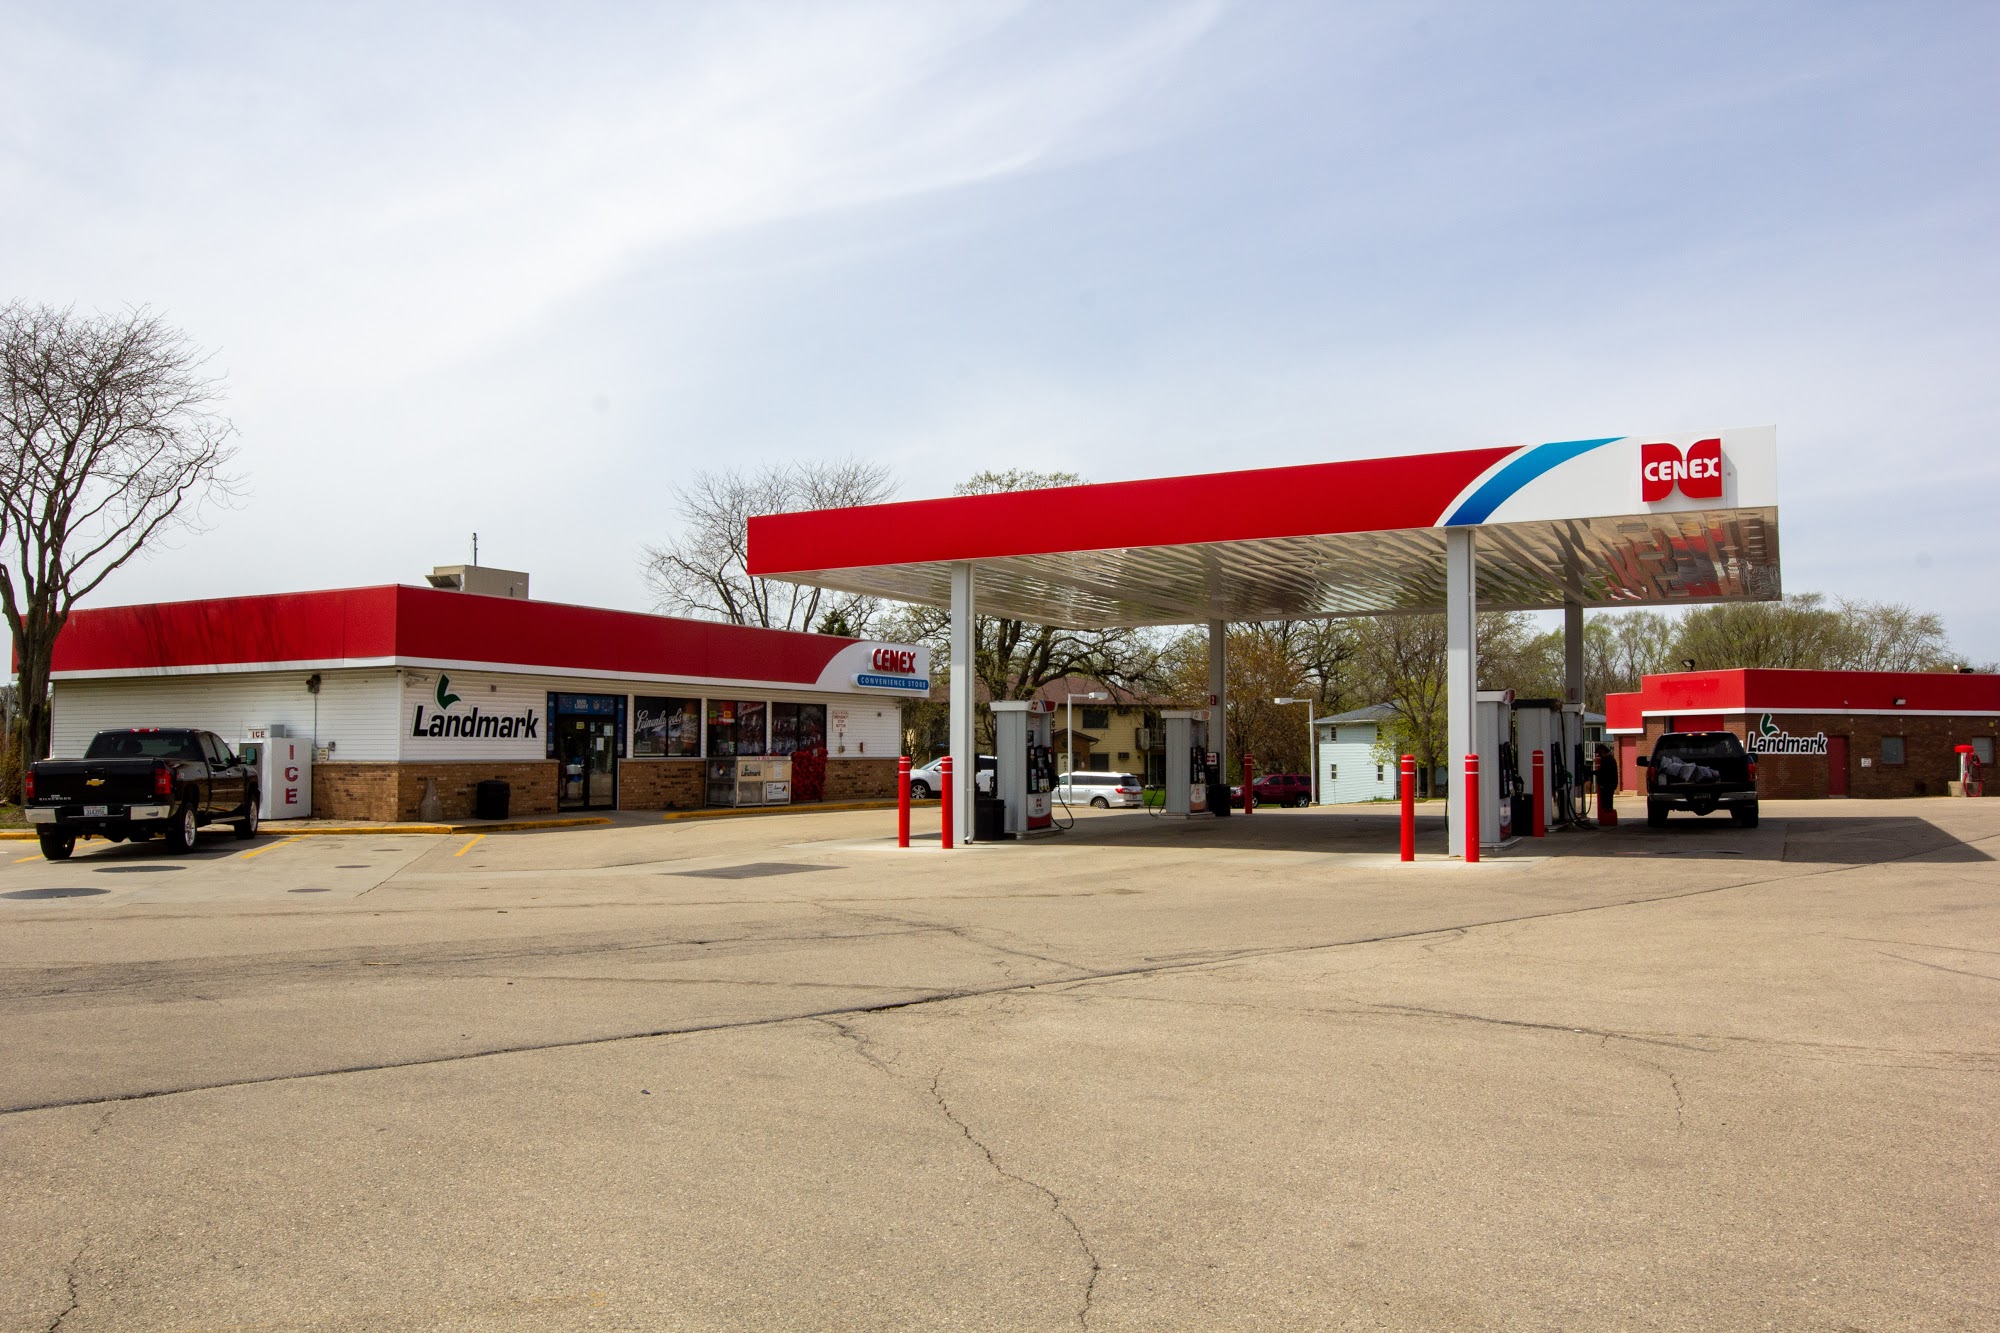 Cottage Grove Cenex Gas Station & Convenience Store